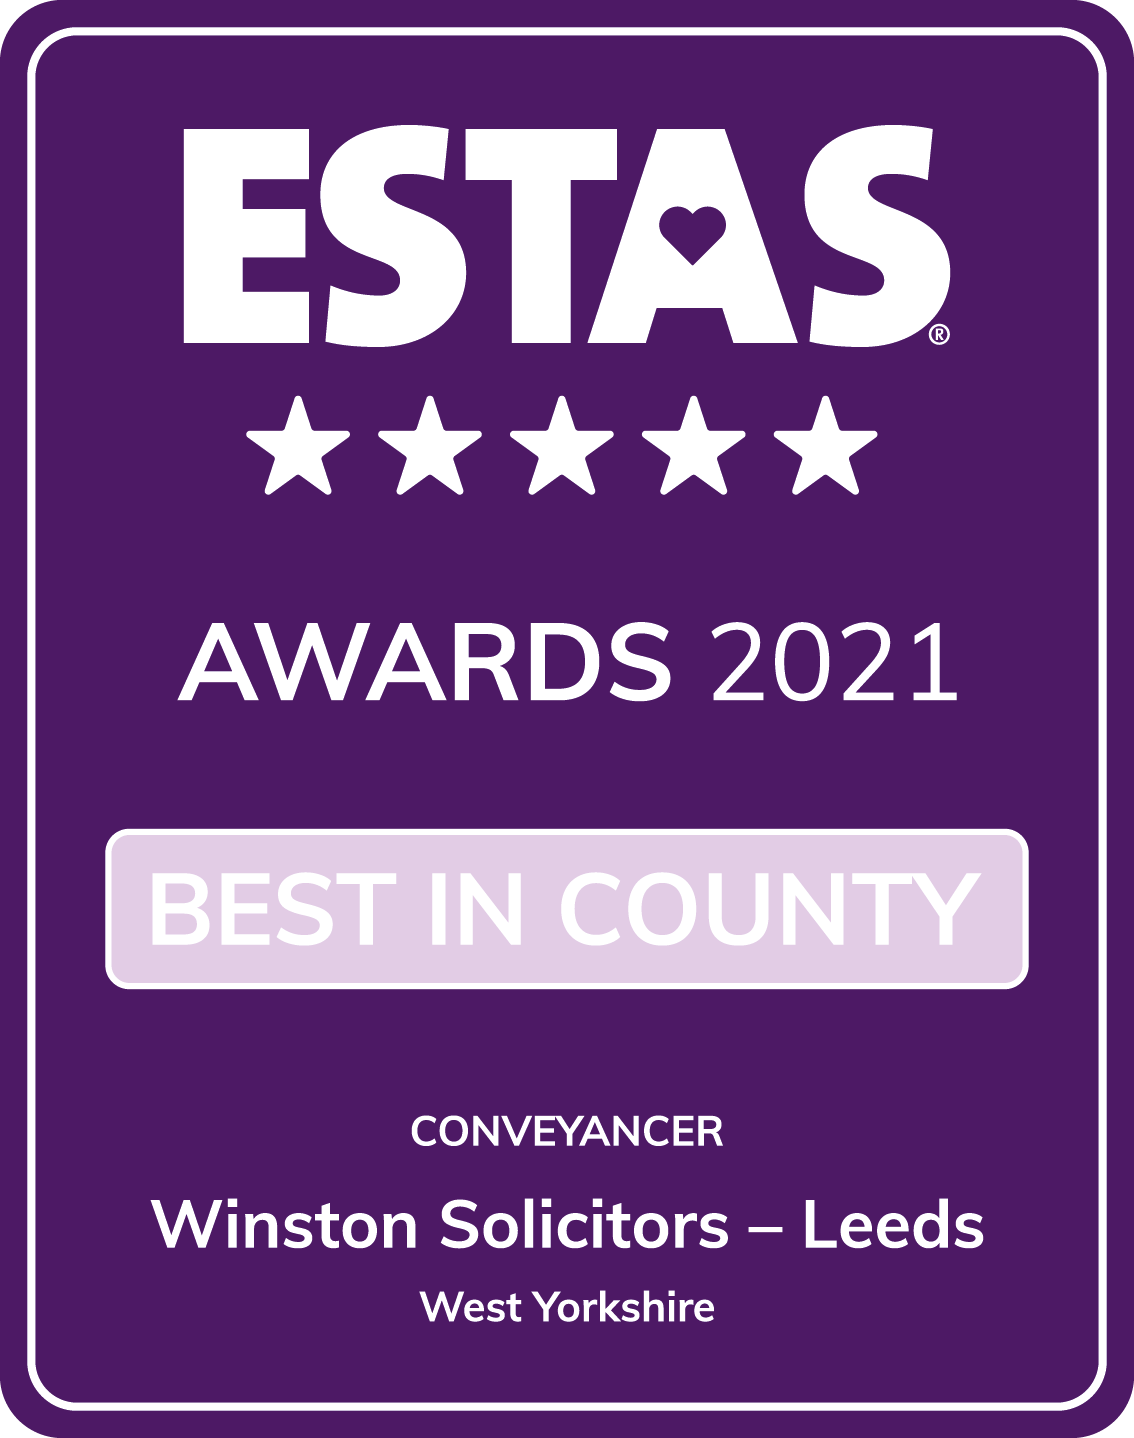 The ESTAS 2021 Best In County Winston Solicitors